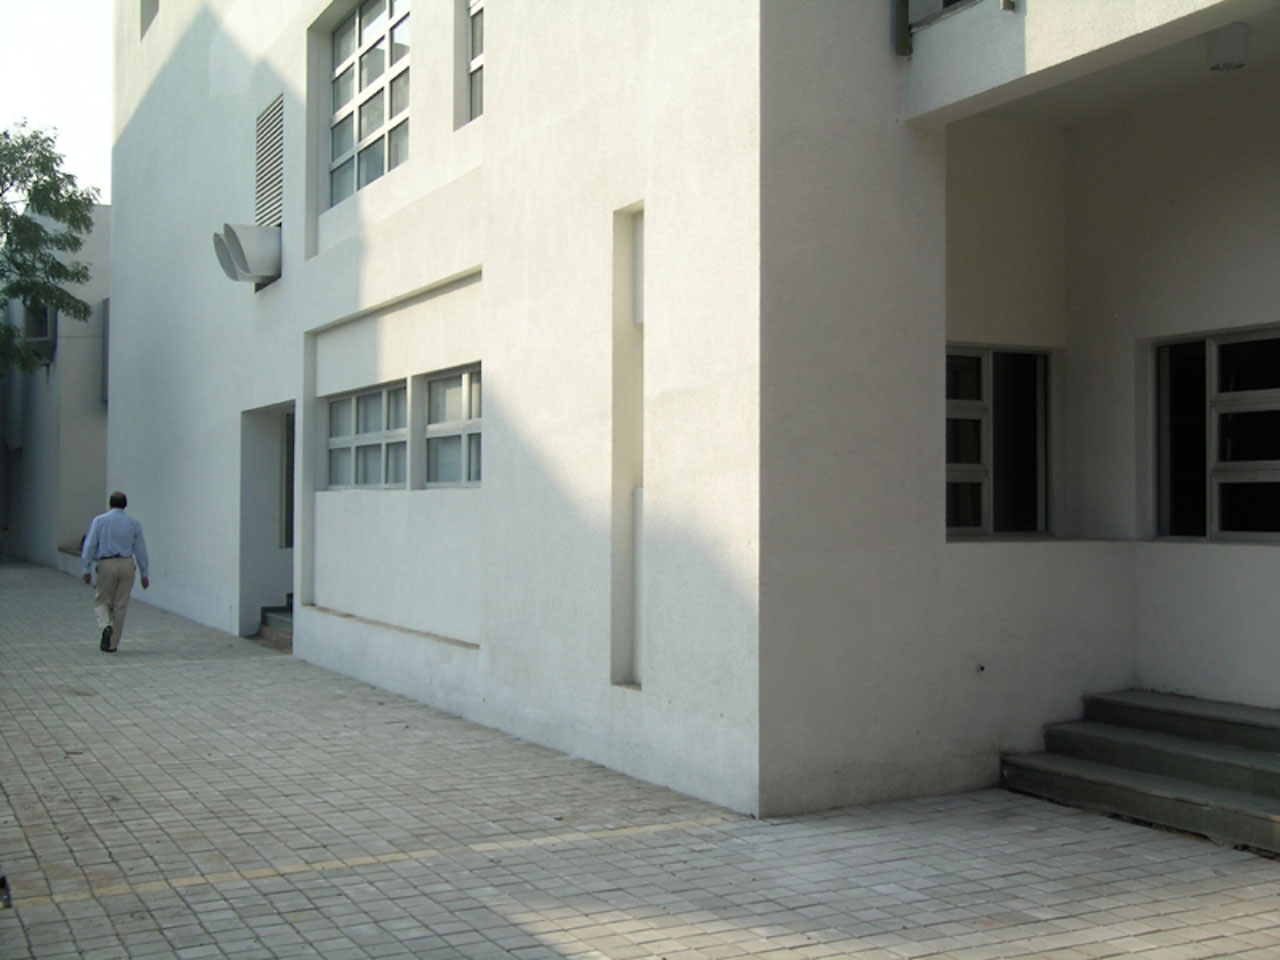 JPAC- Jairamdas Patel Academic Center at the Muljibhai Patel Urological Hospital Campus Nadiad, Gujarat by Indigo Architects 37